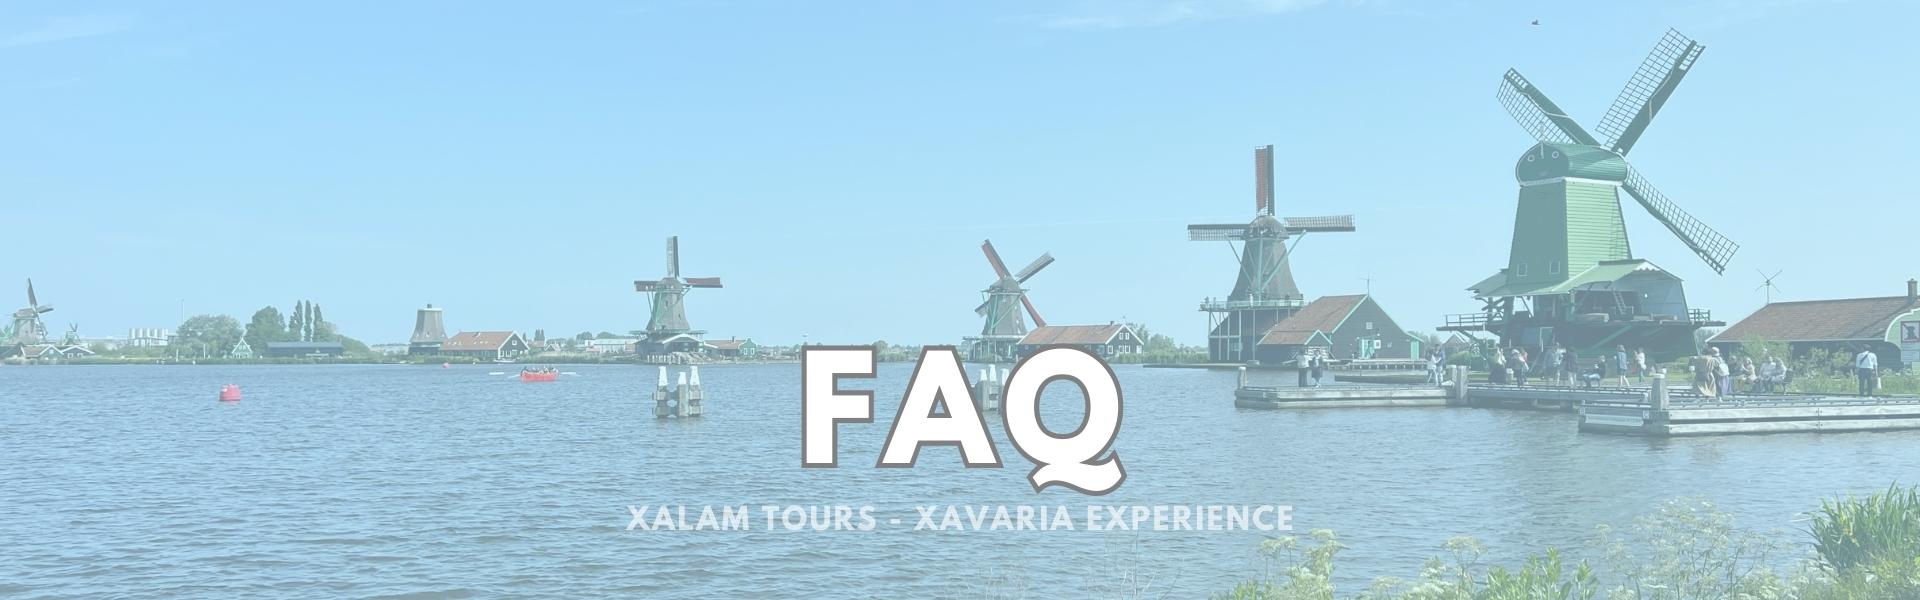 Sss - Hollanda Deneyimi - Xalam Tours